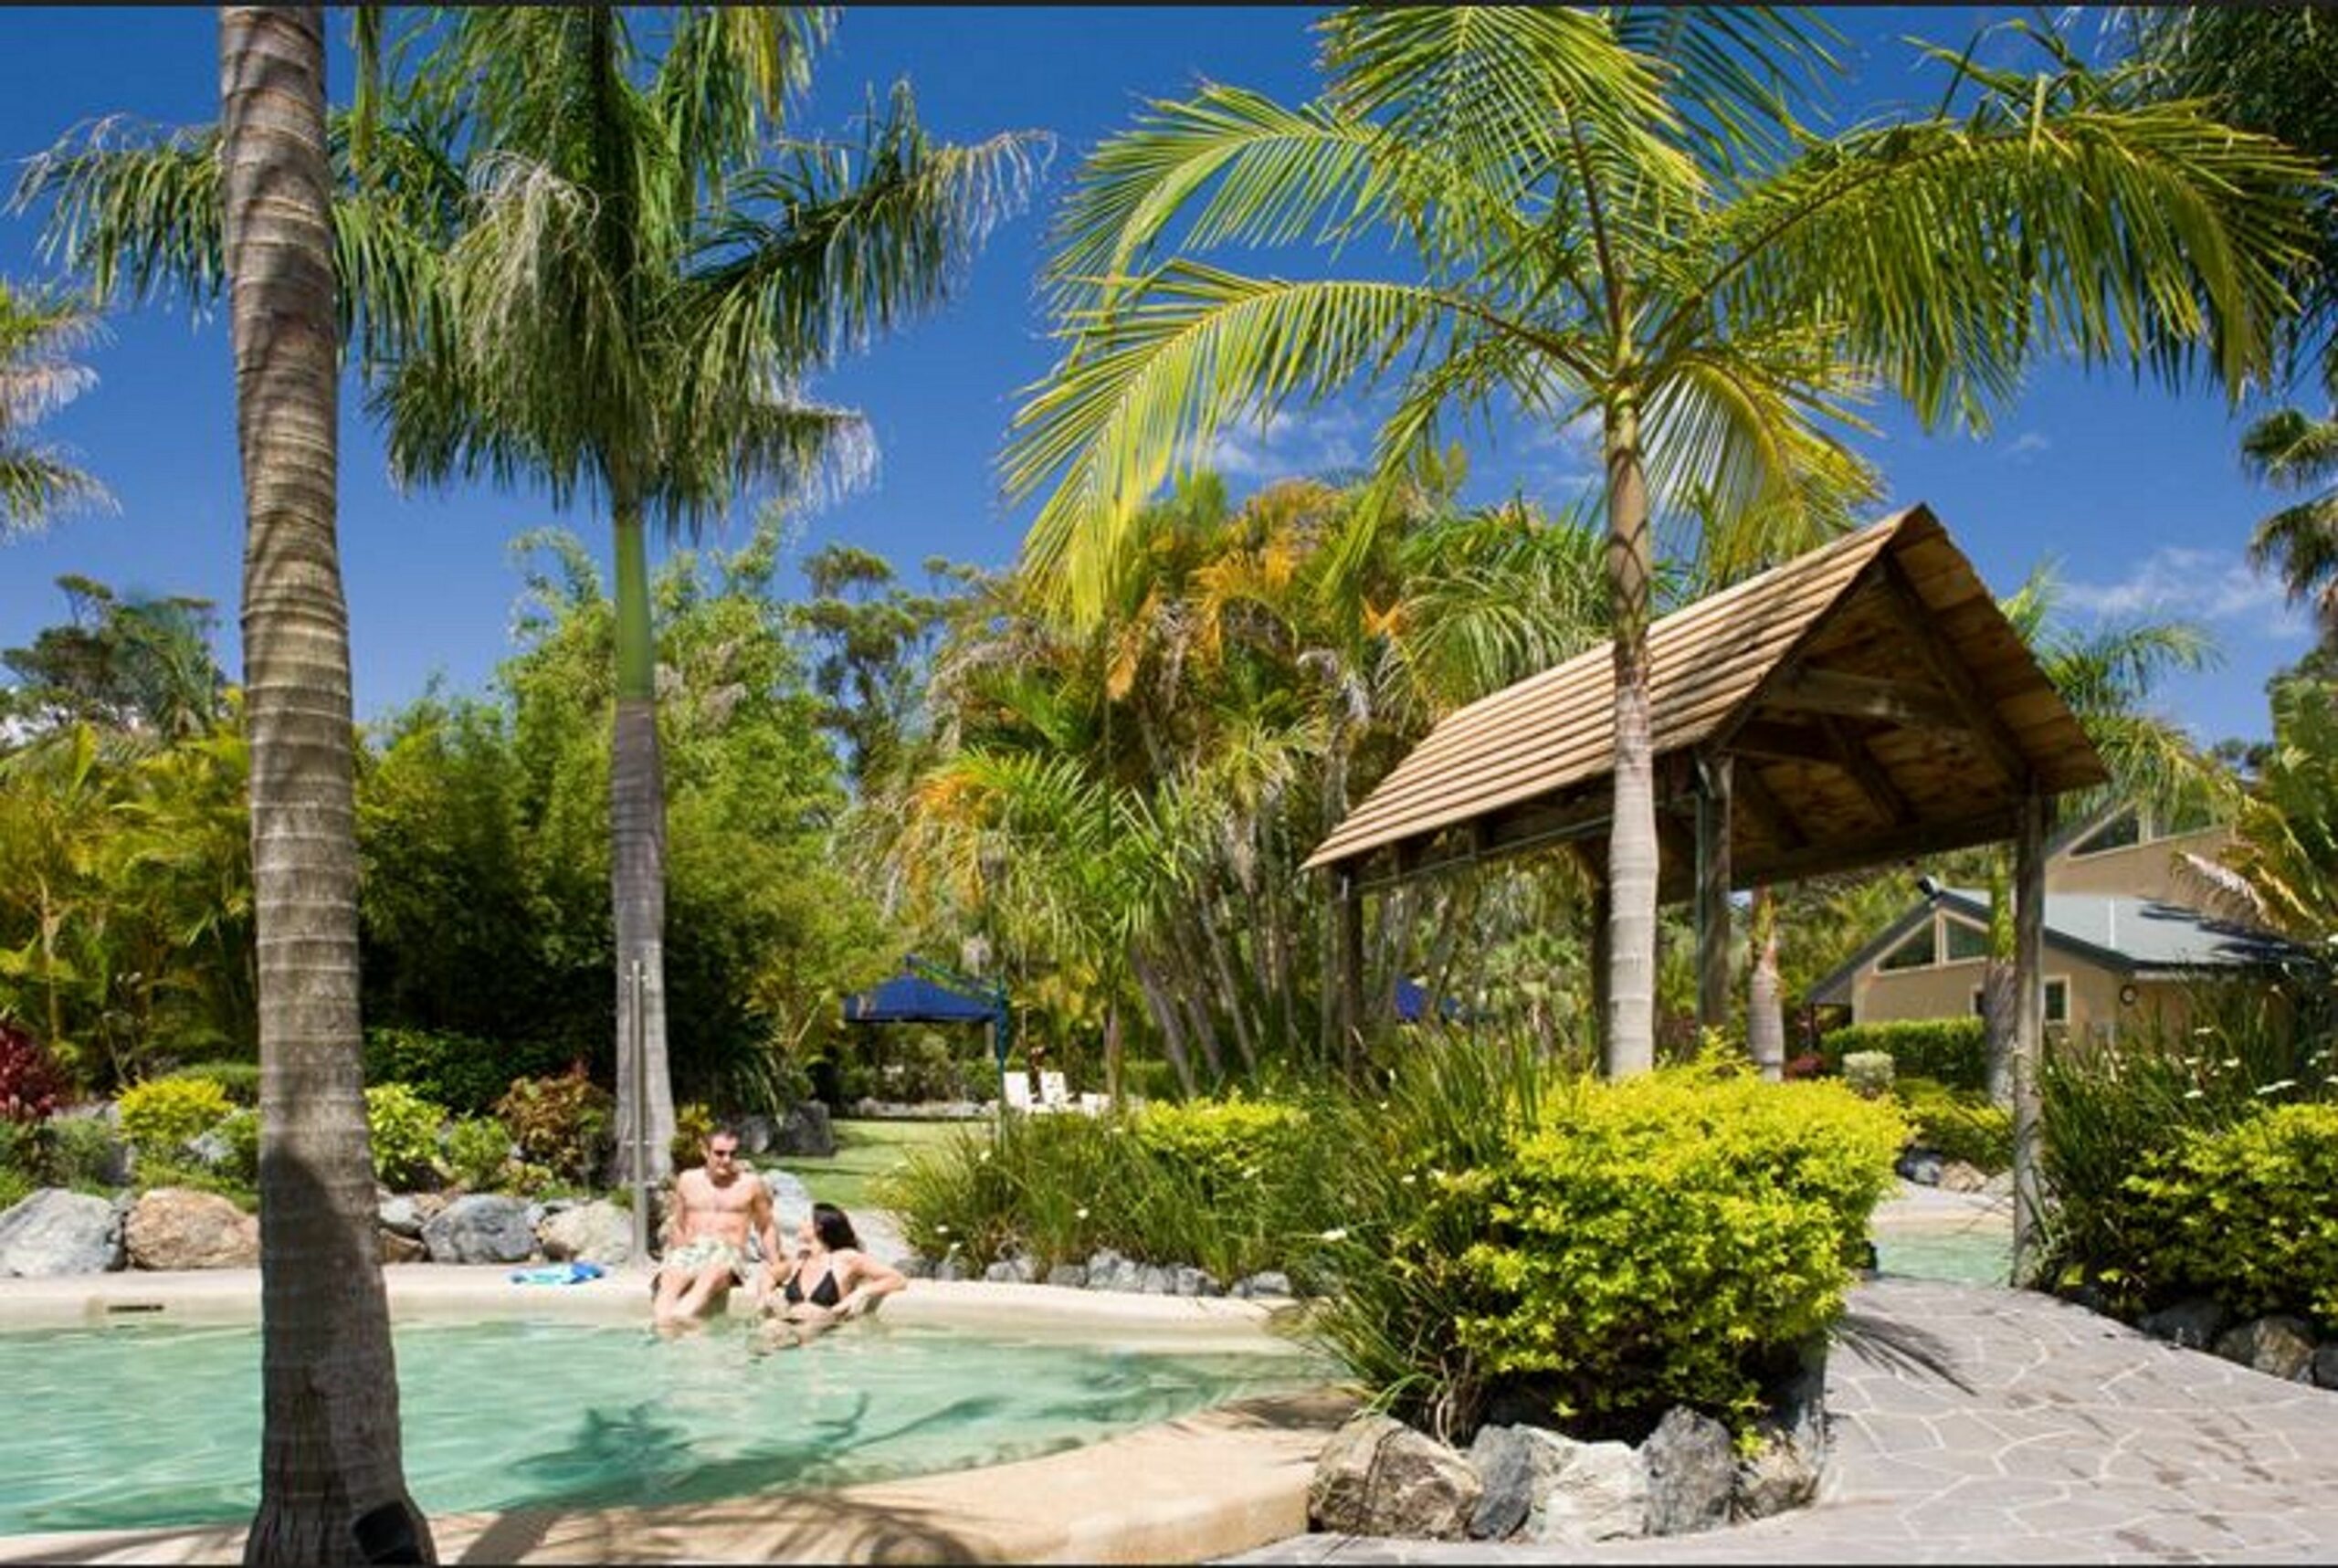 NRMA Darlington Beach Holiday Resort